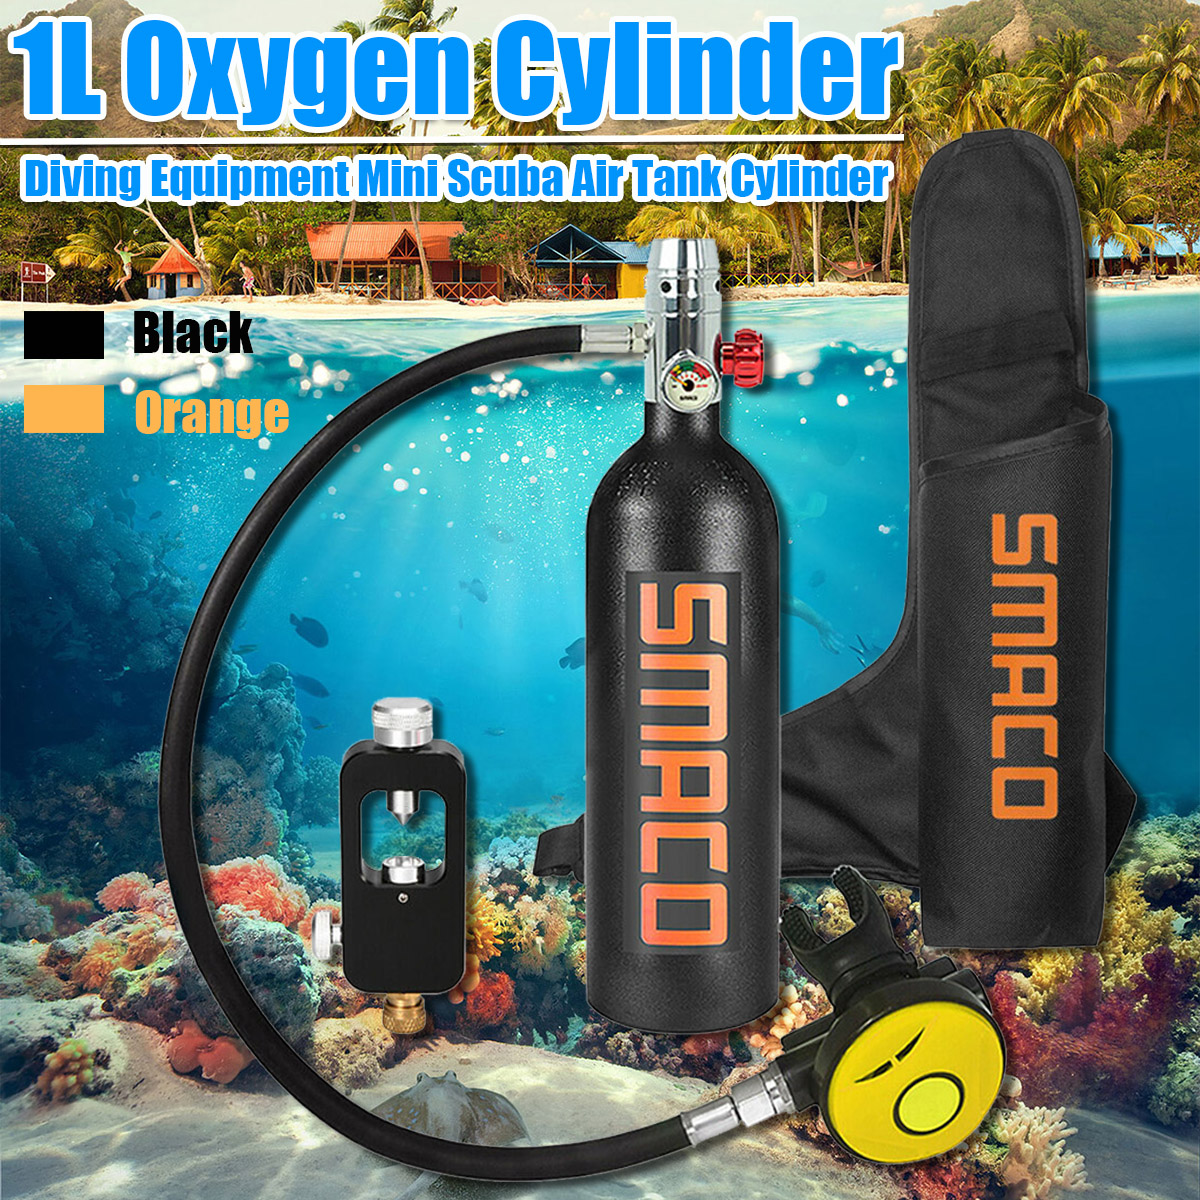 1L SMACO Mini Diving Air Tank Scuba Cylinder Oxygen Tank Underwater Breath Kits 